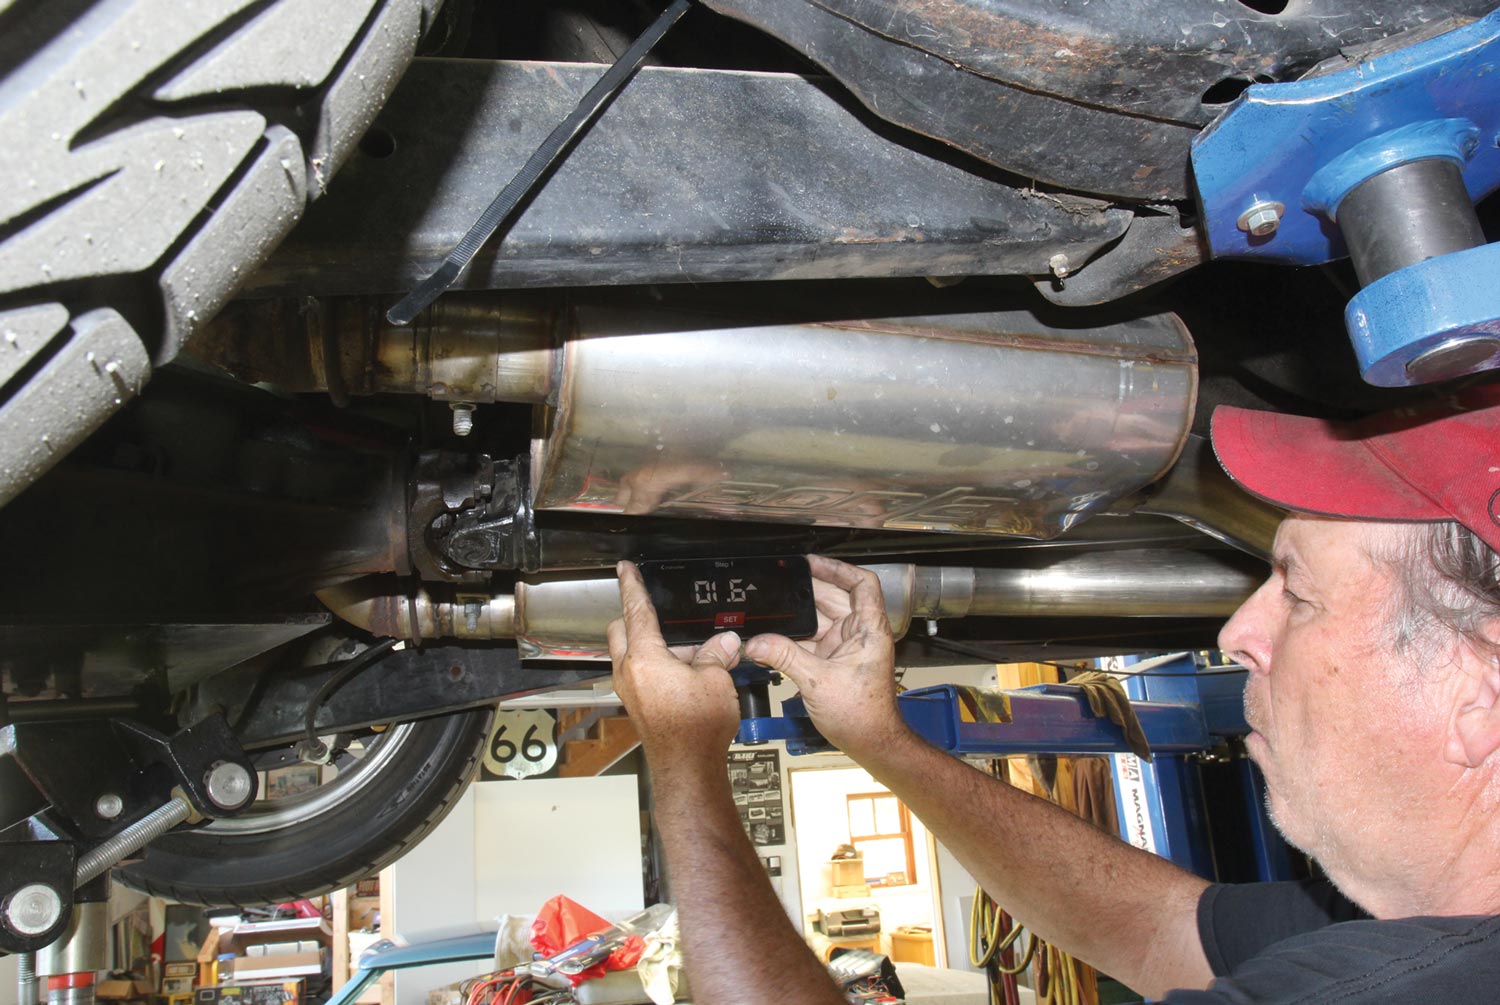 Mechanic uses a gauge beneath a car